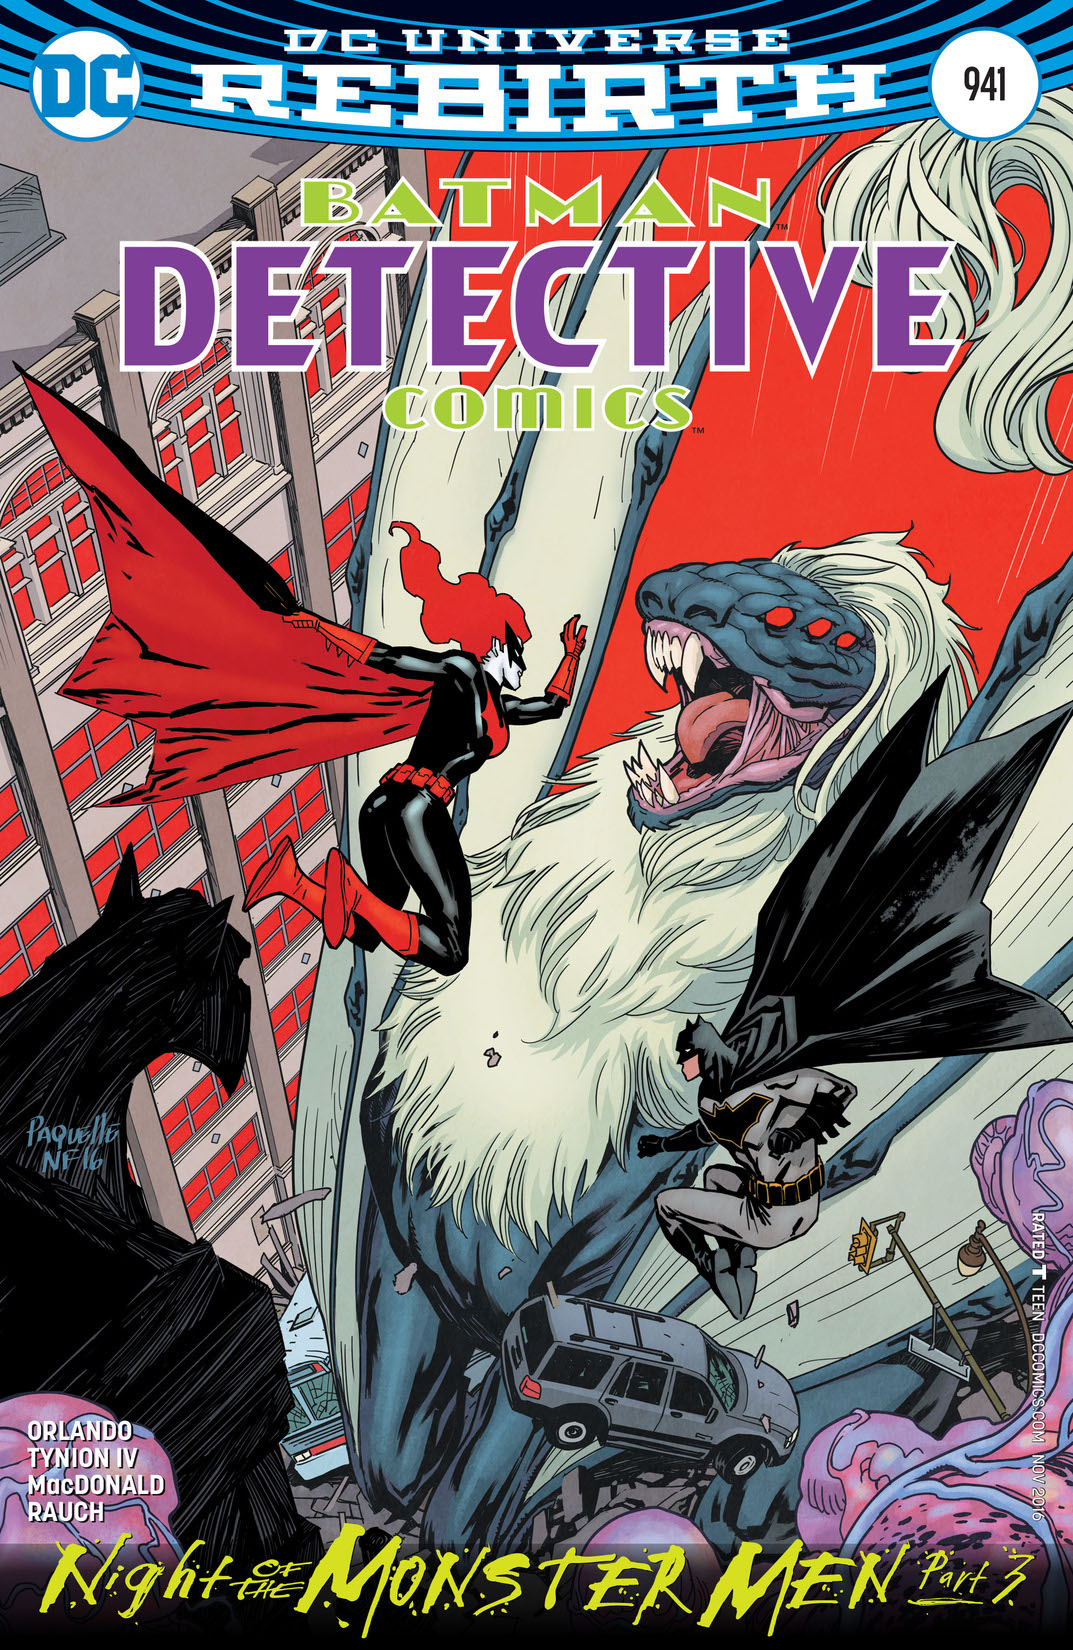 Detective Comics (2016-) #941 preview images